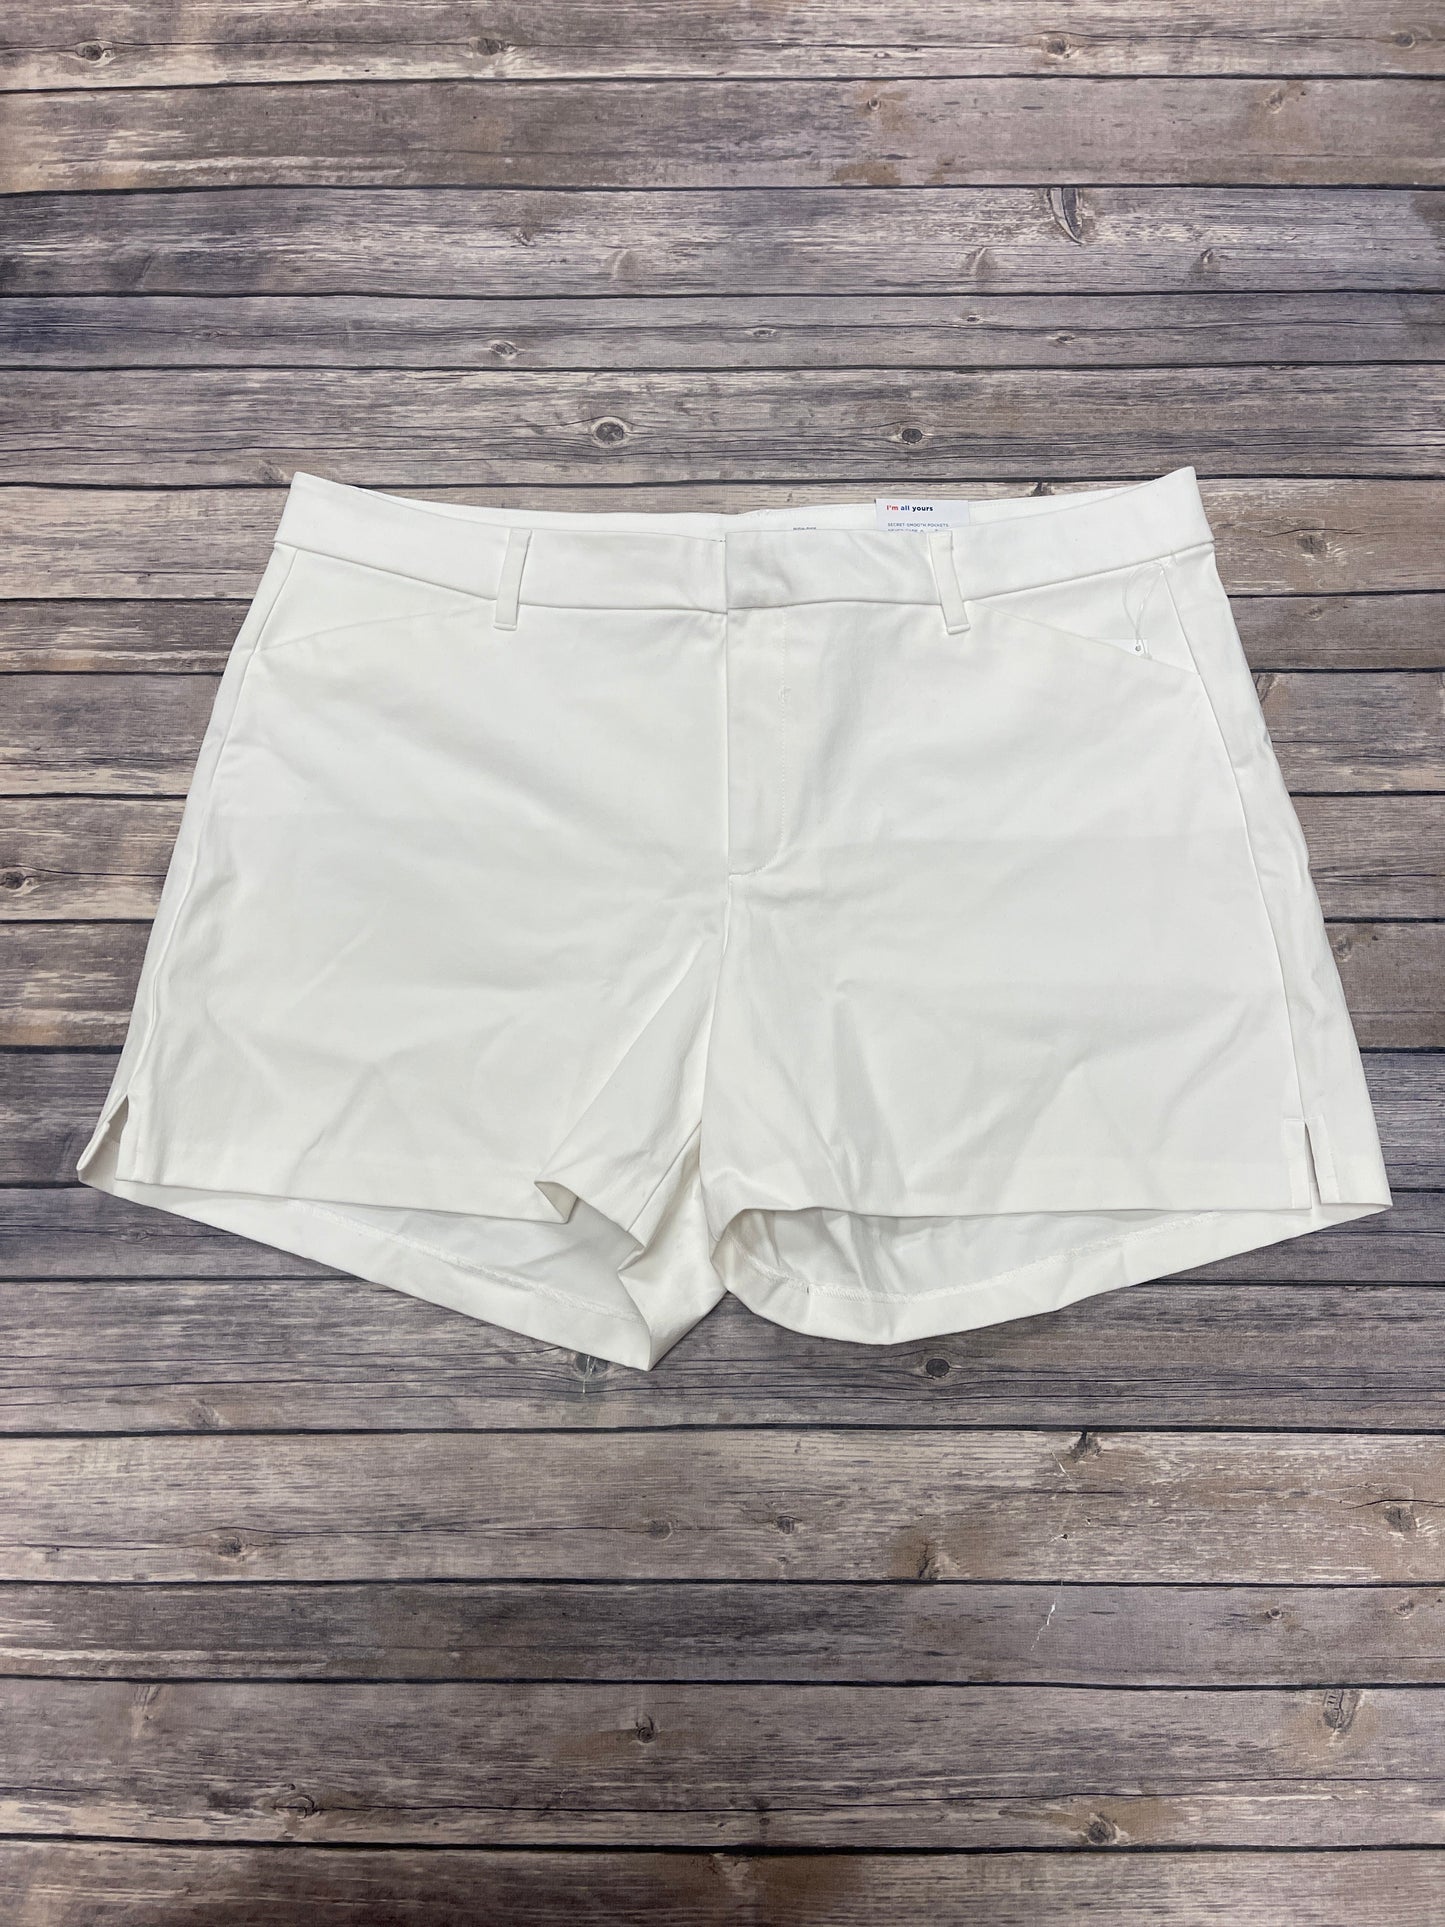 White Shorts Old Navy, Size 22